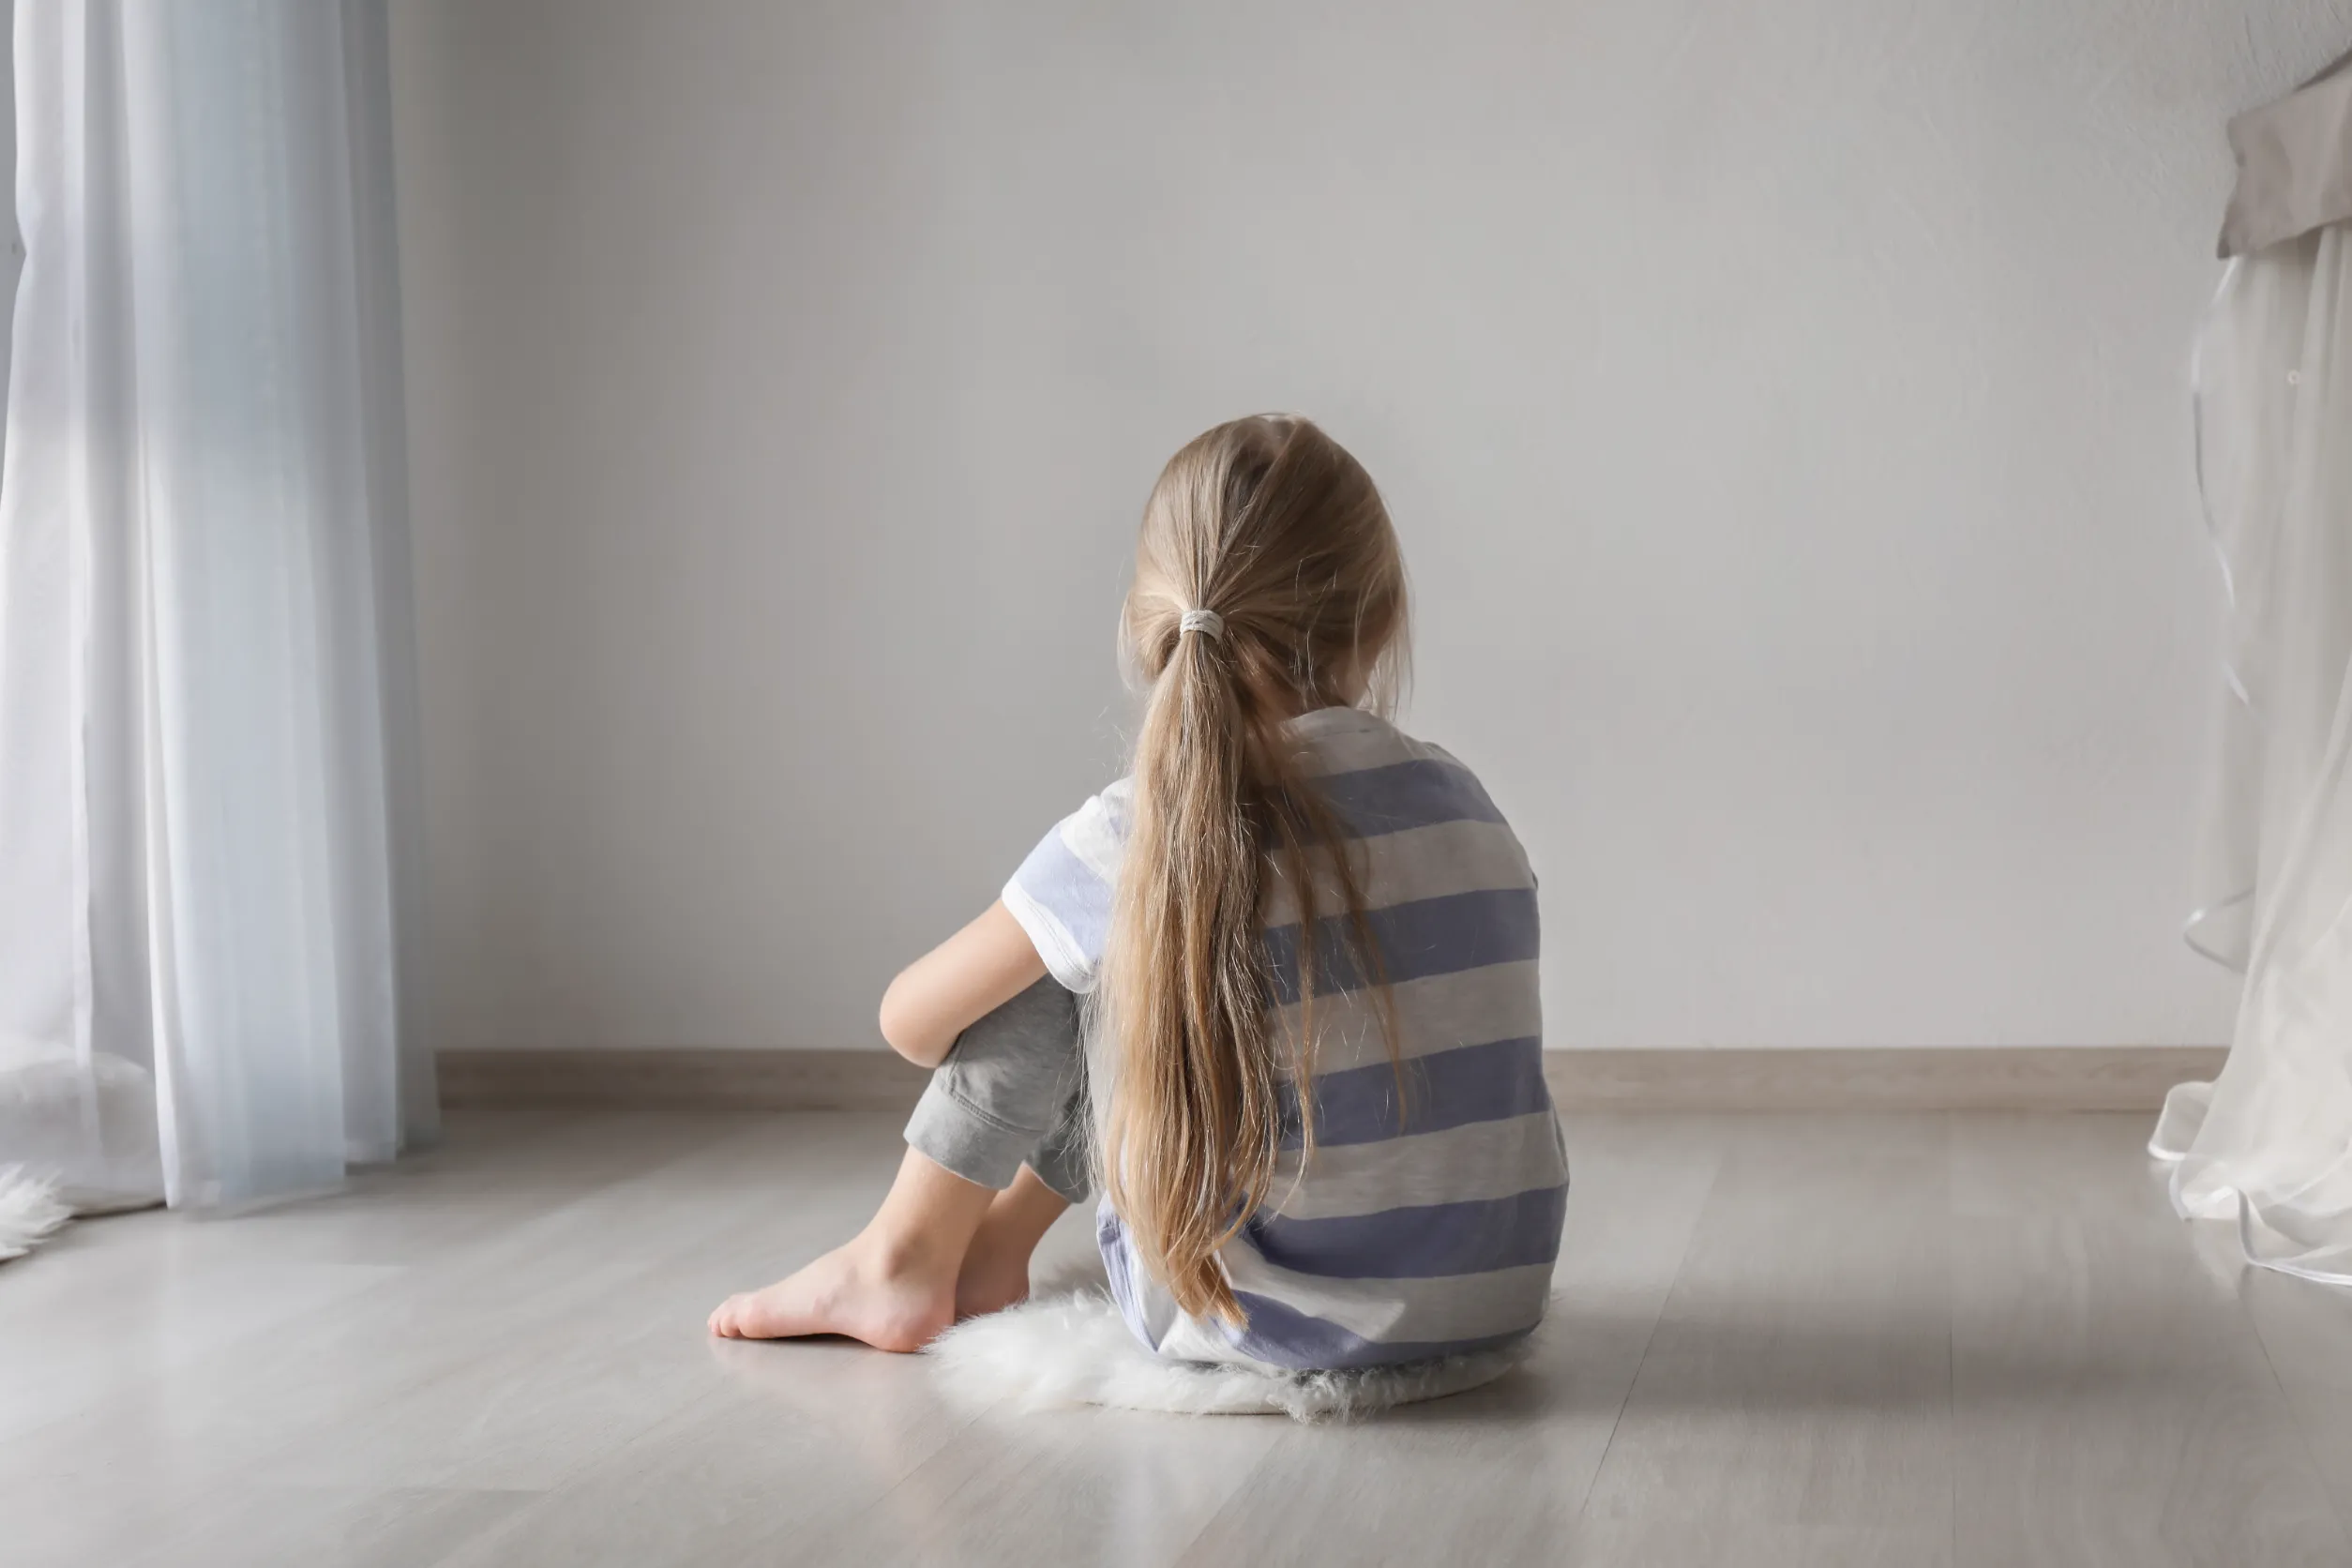 Lonely child sitting on her bedroom floor